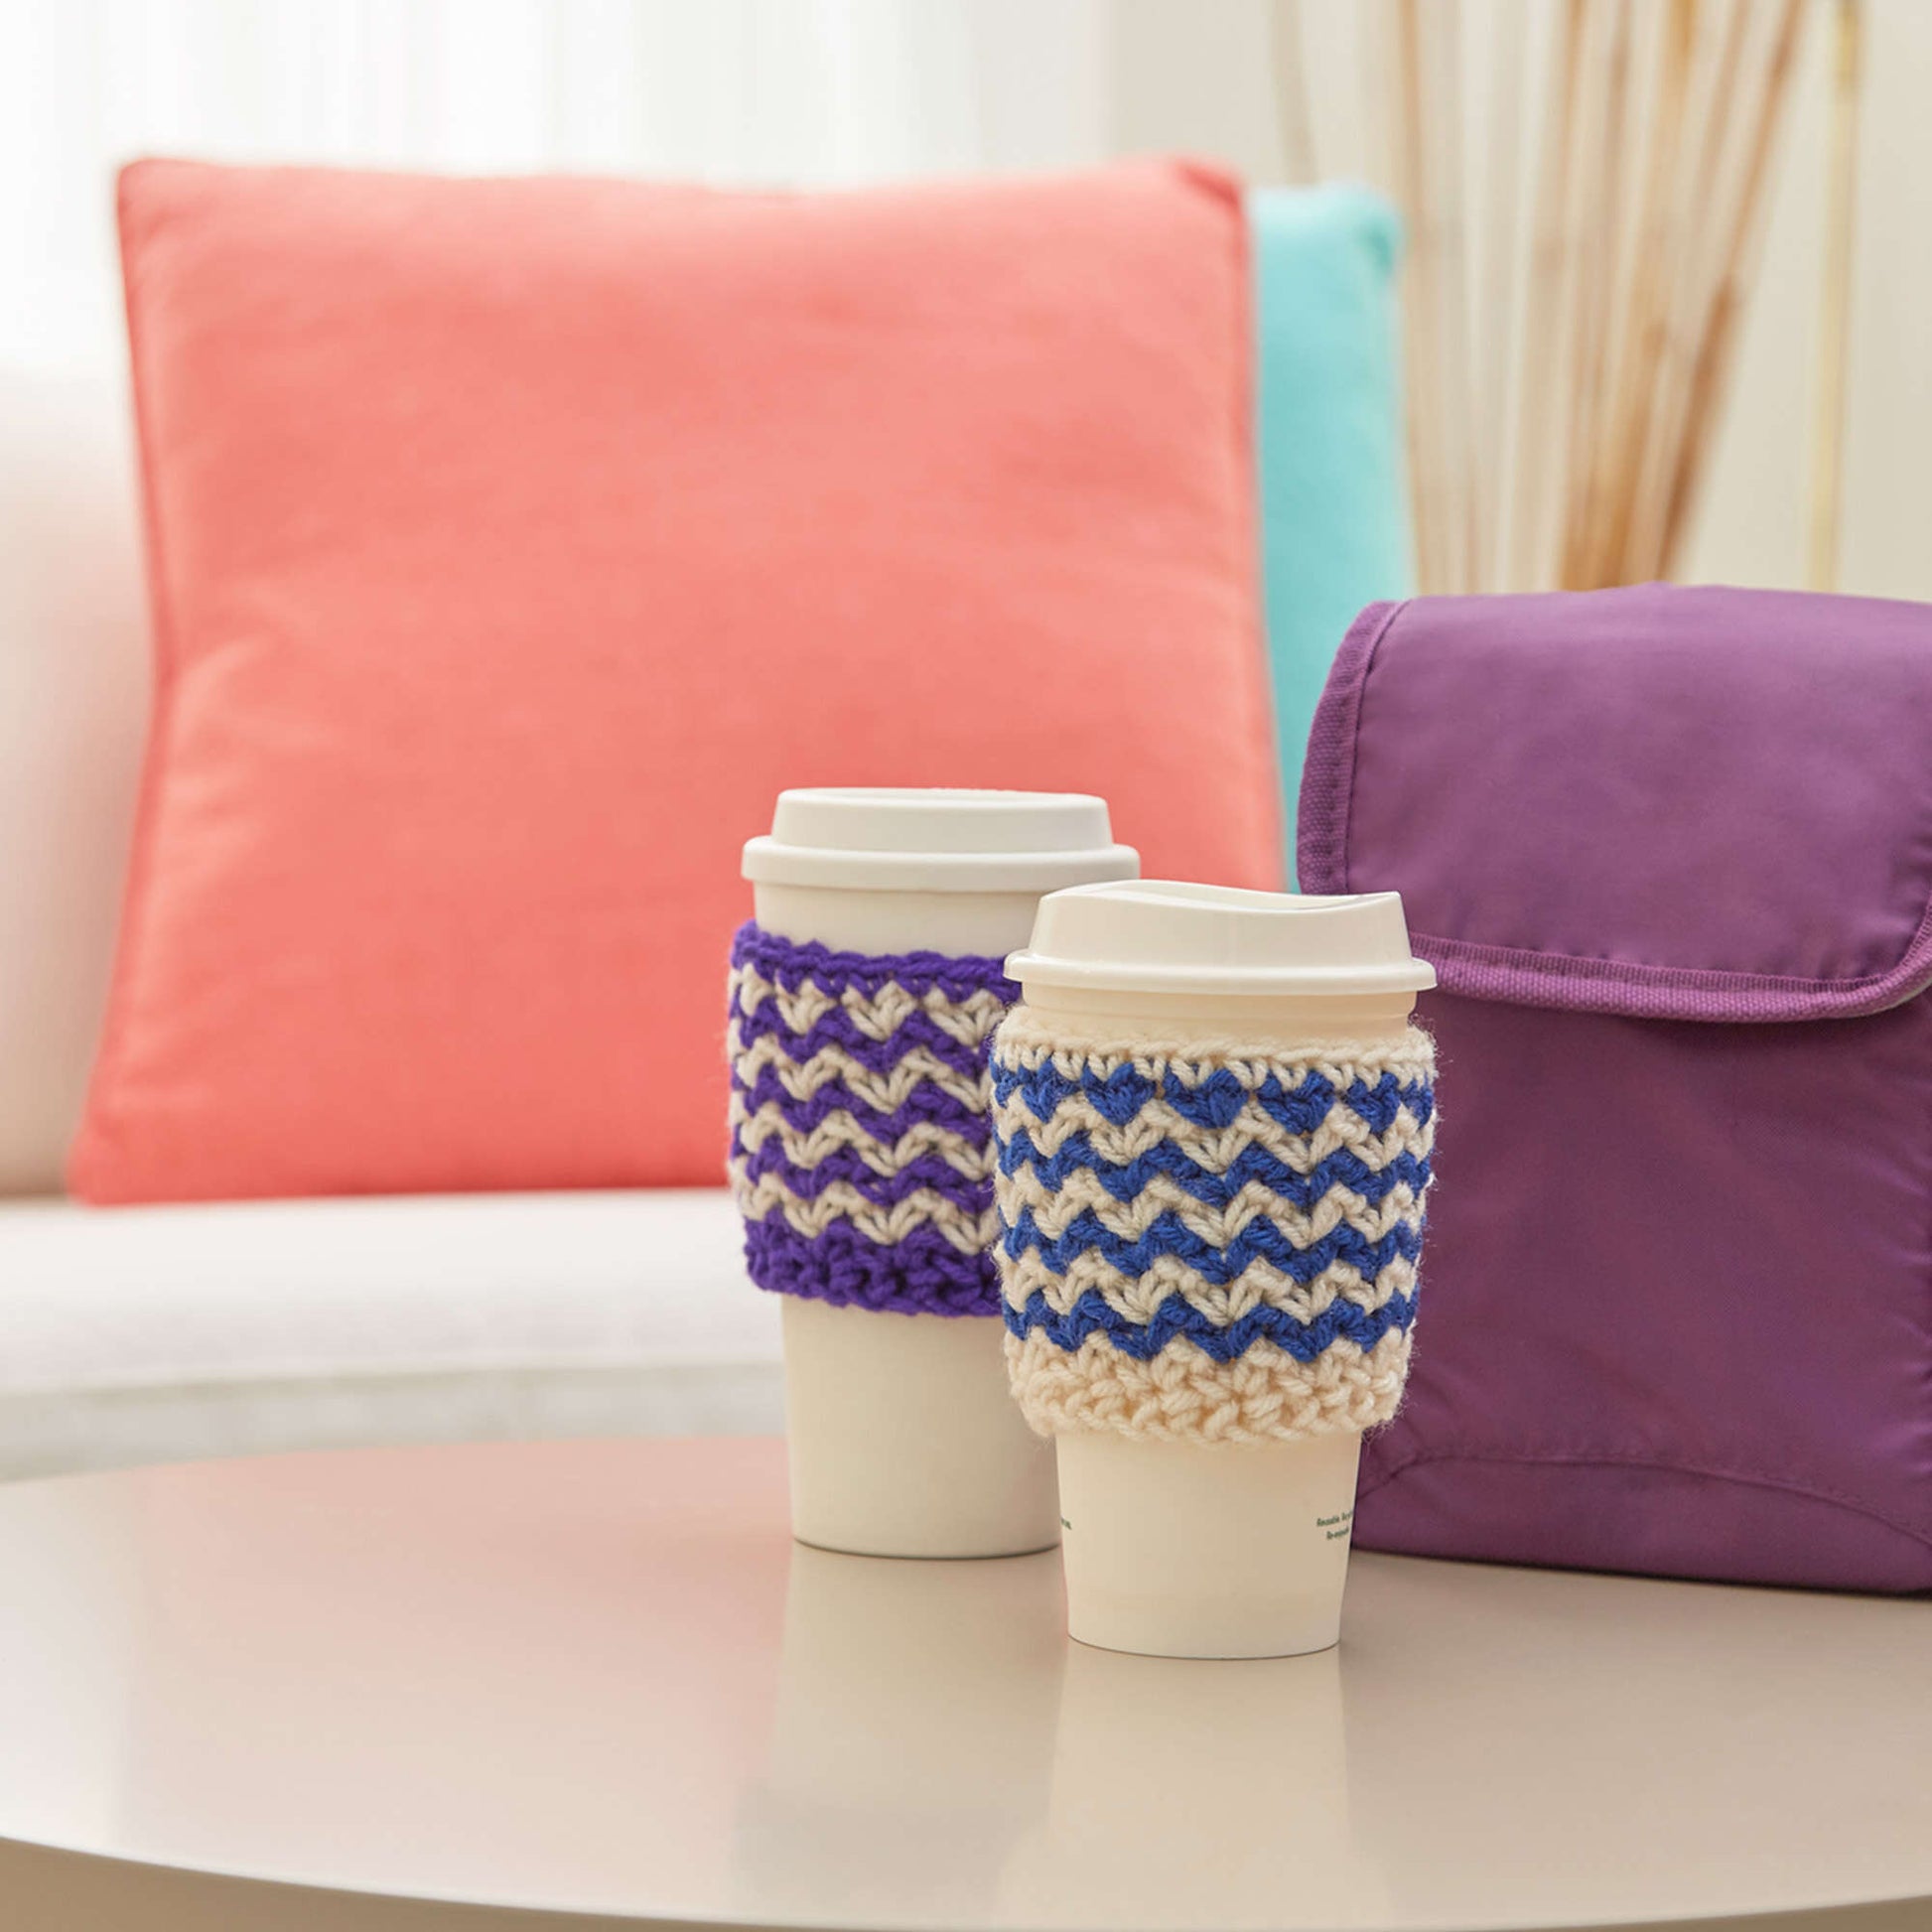 easy free crochet cup cozy pattern 